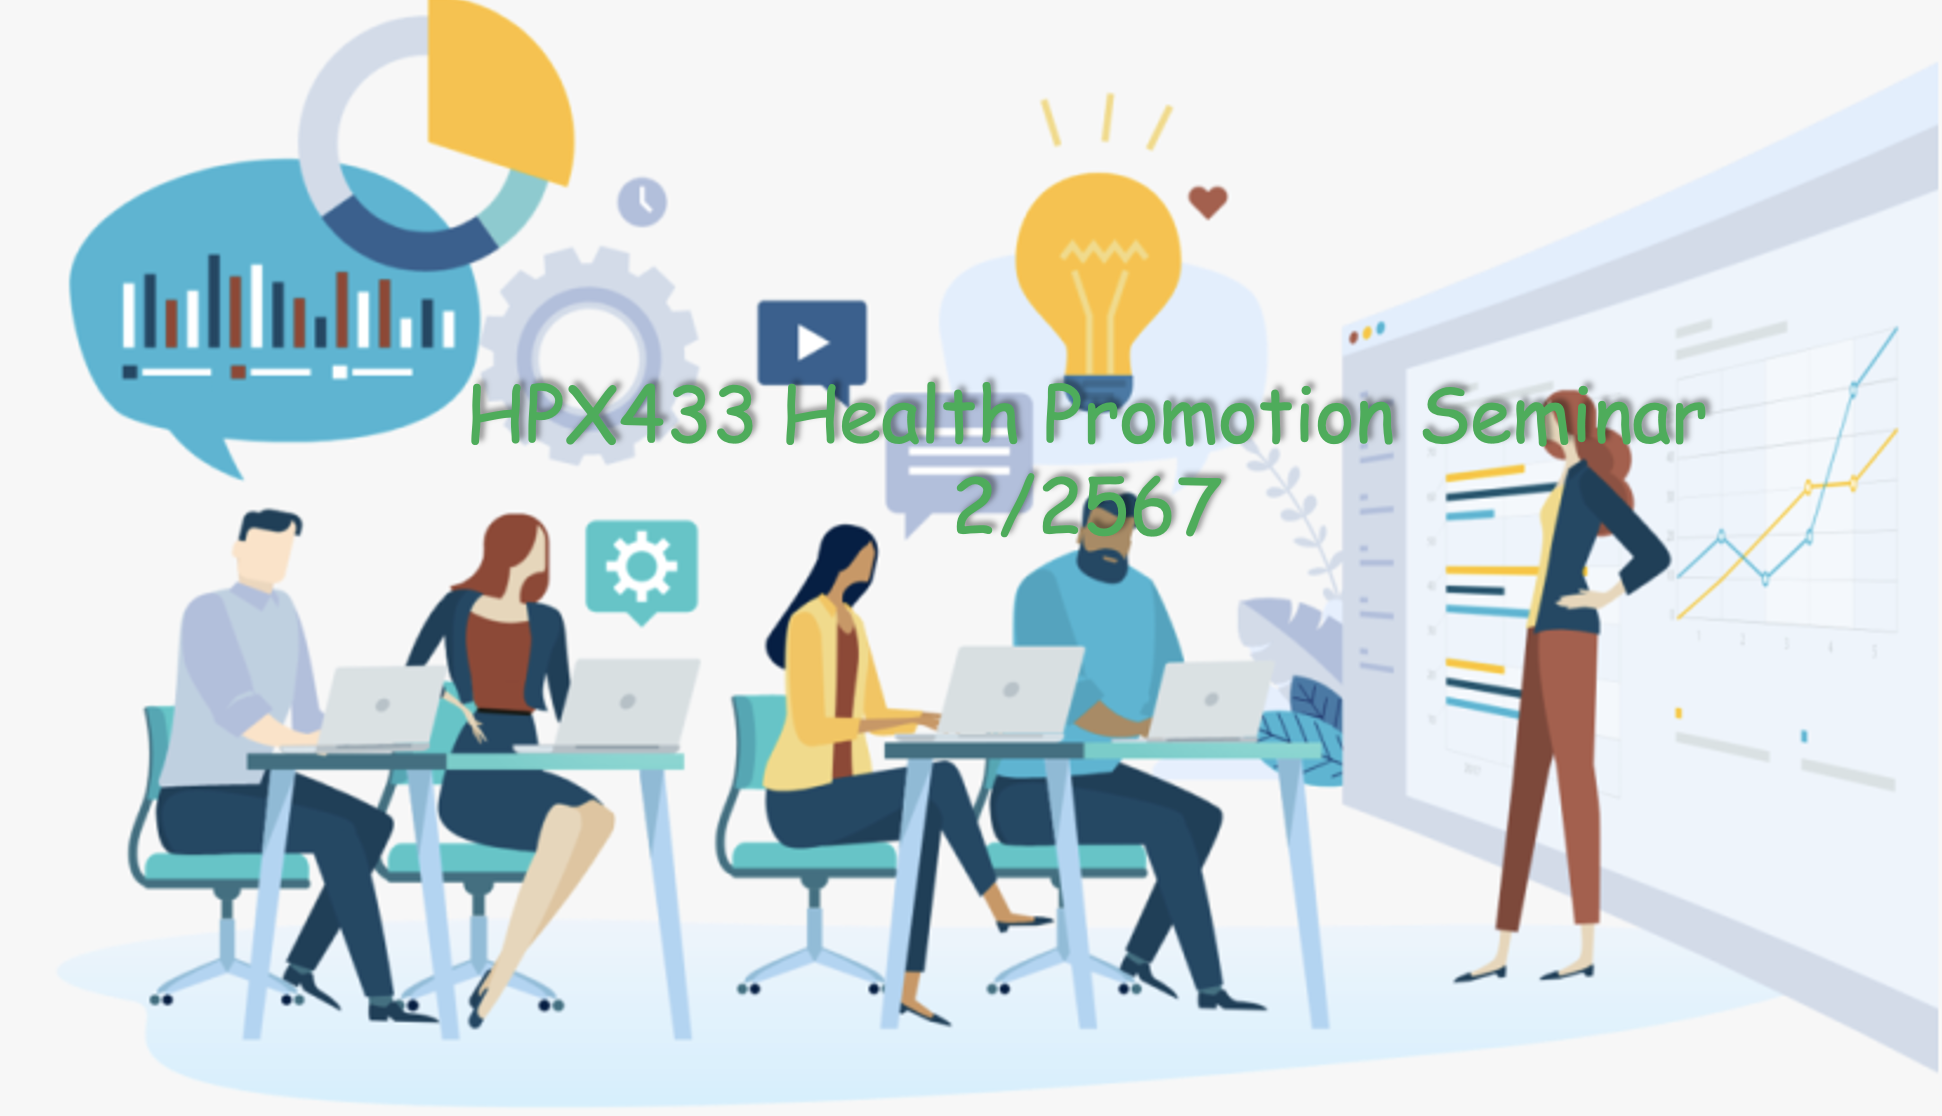 HPX433 Health Promotion Seminar/2567